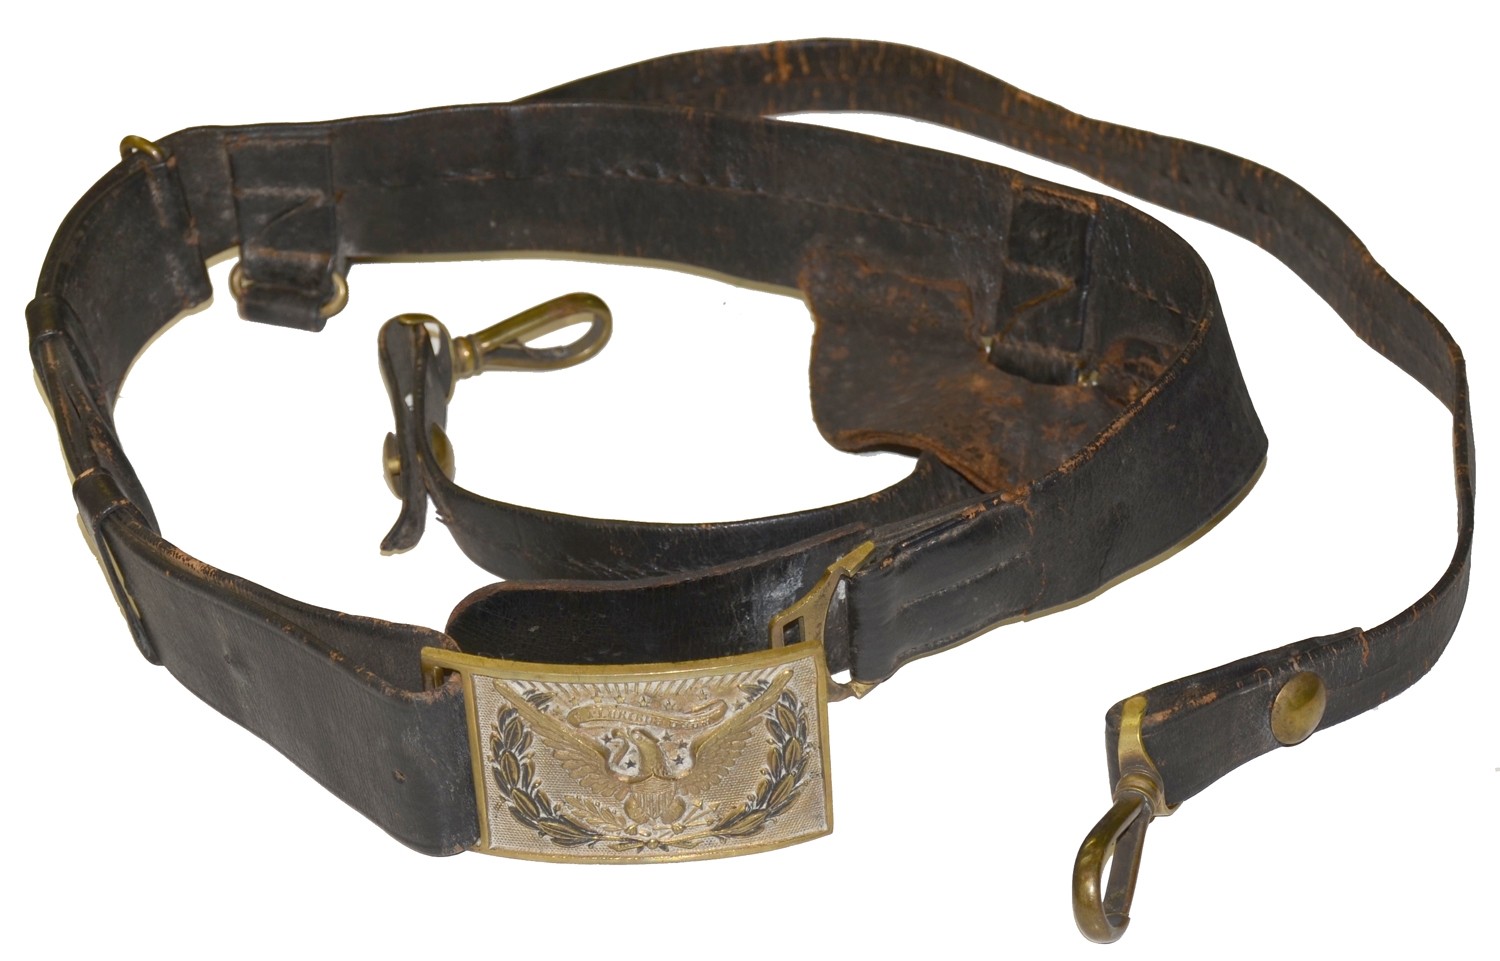 CIVIL WAR OFFICER'S SWORD BELT WITH PATTERN 1851 BUCKLE — Horse Soldier